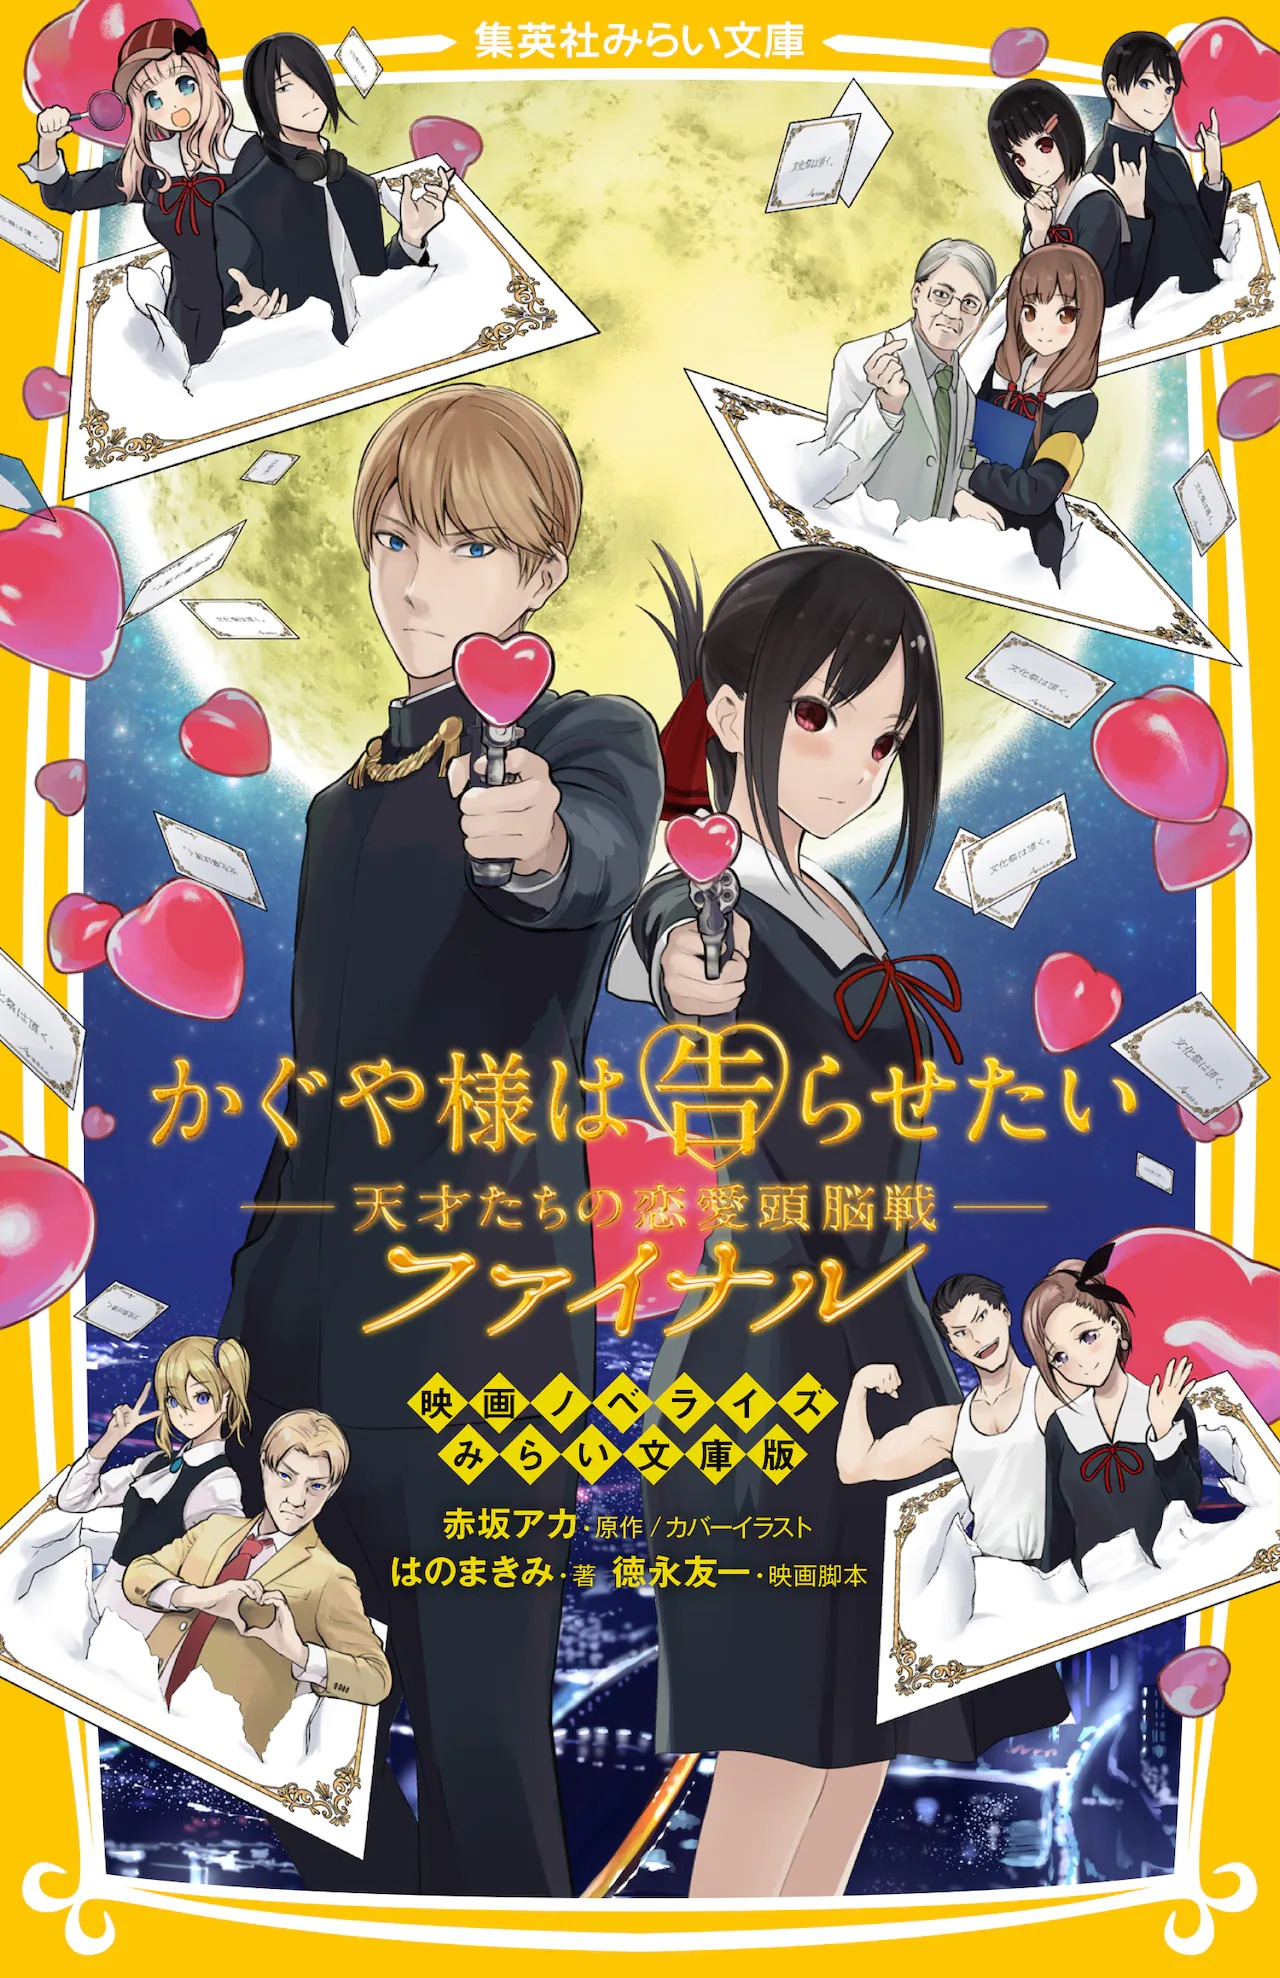 Kaguya-sama Love is War tendrá una película anime - Ramen Para Dos